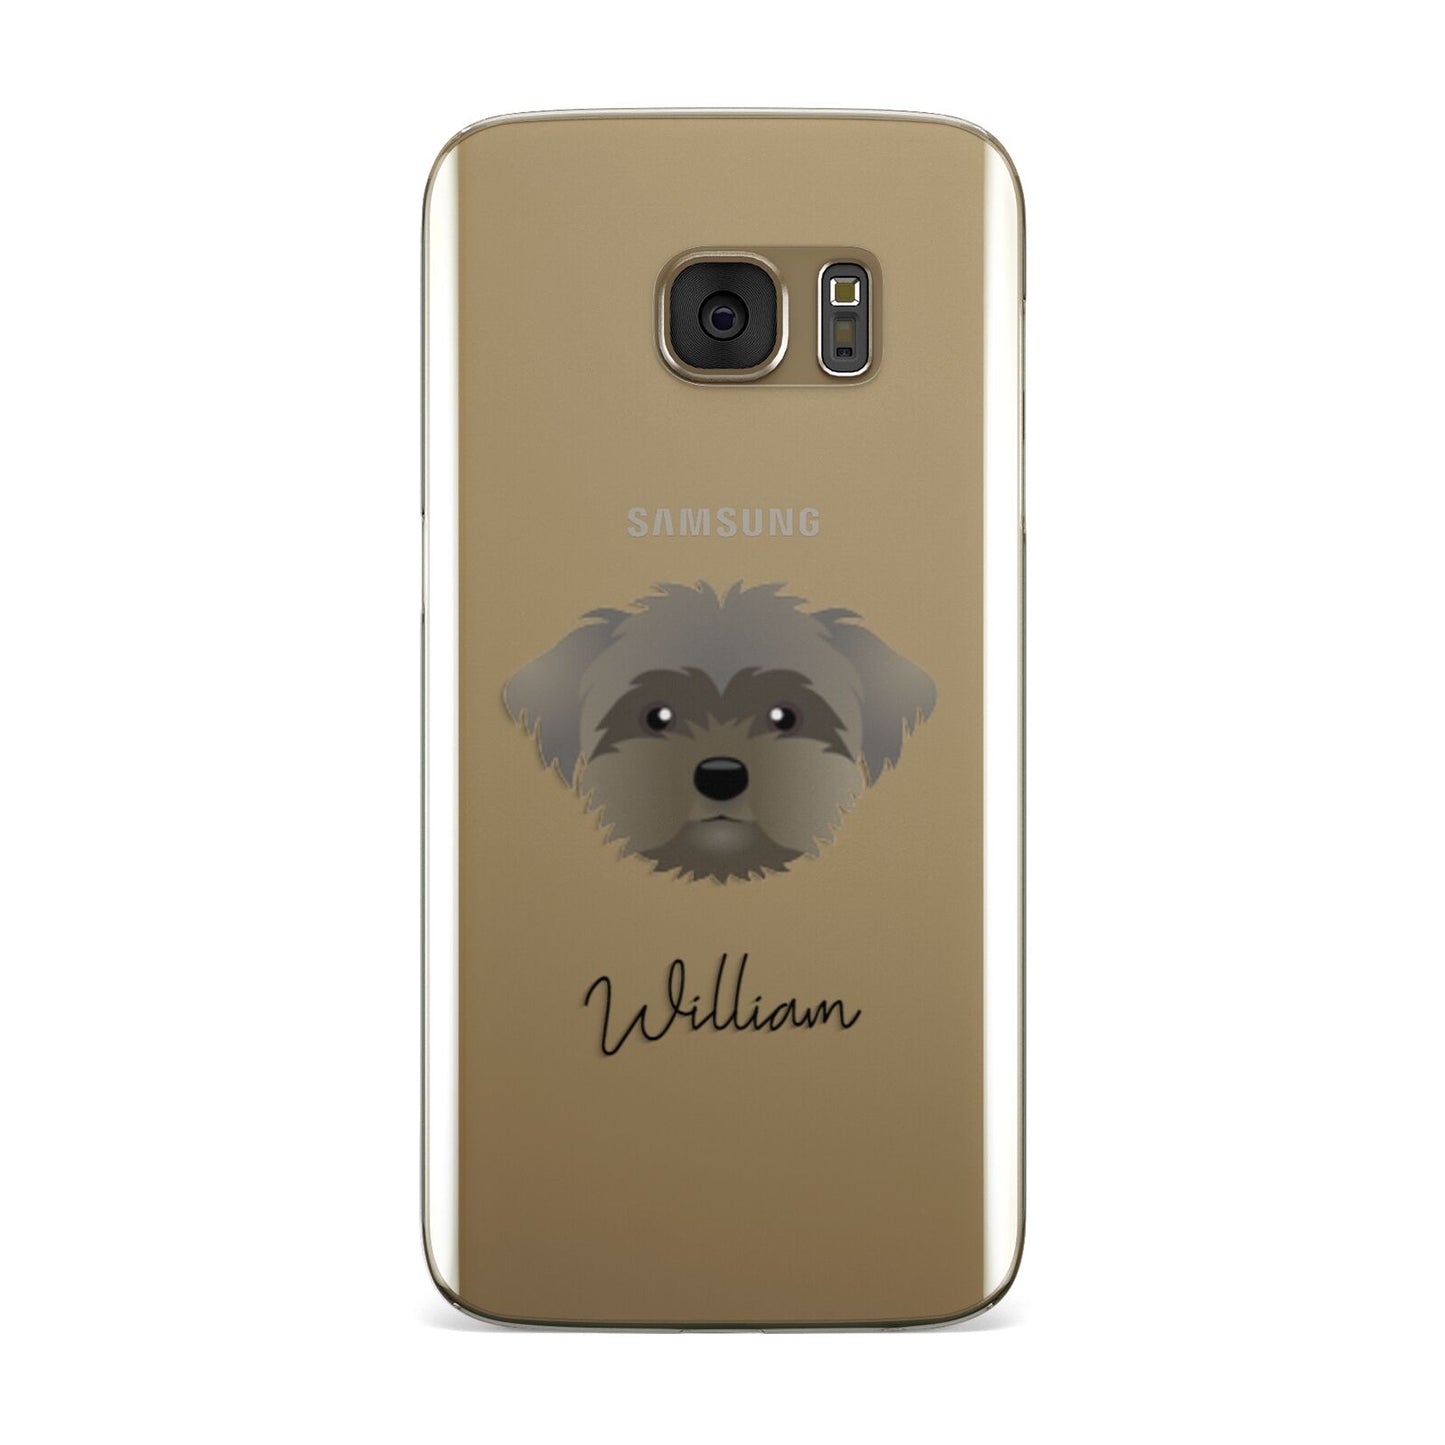 Peek a poo Personalised Samsung Galaxy Case